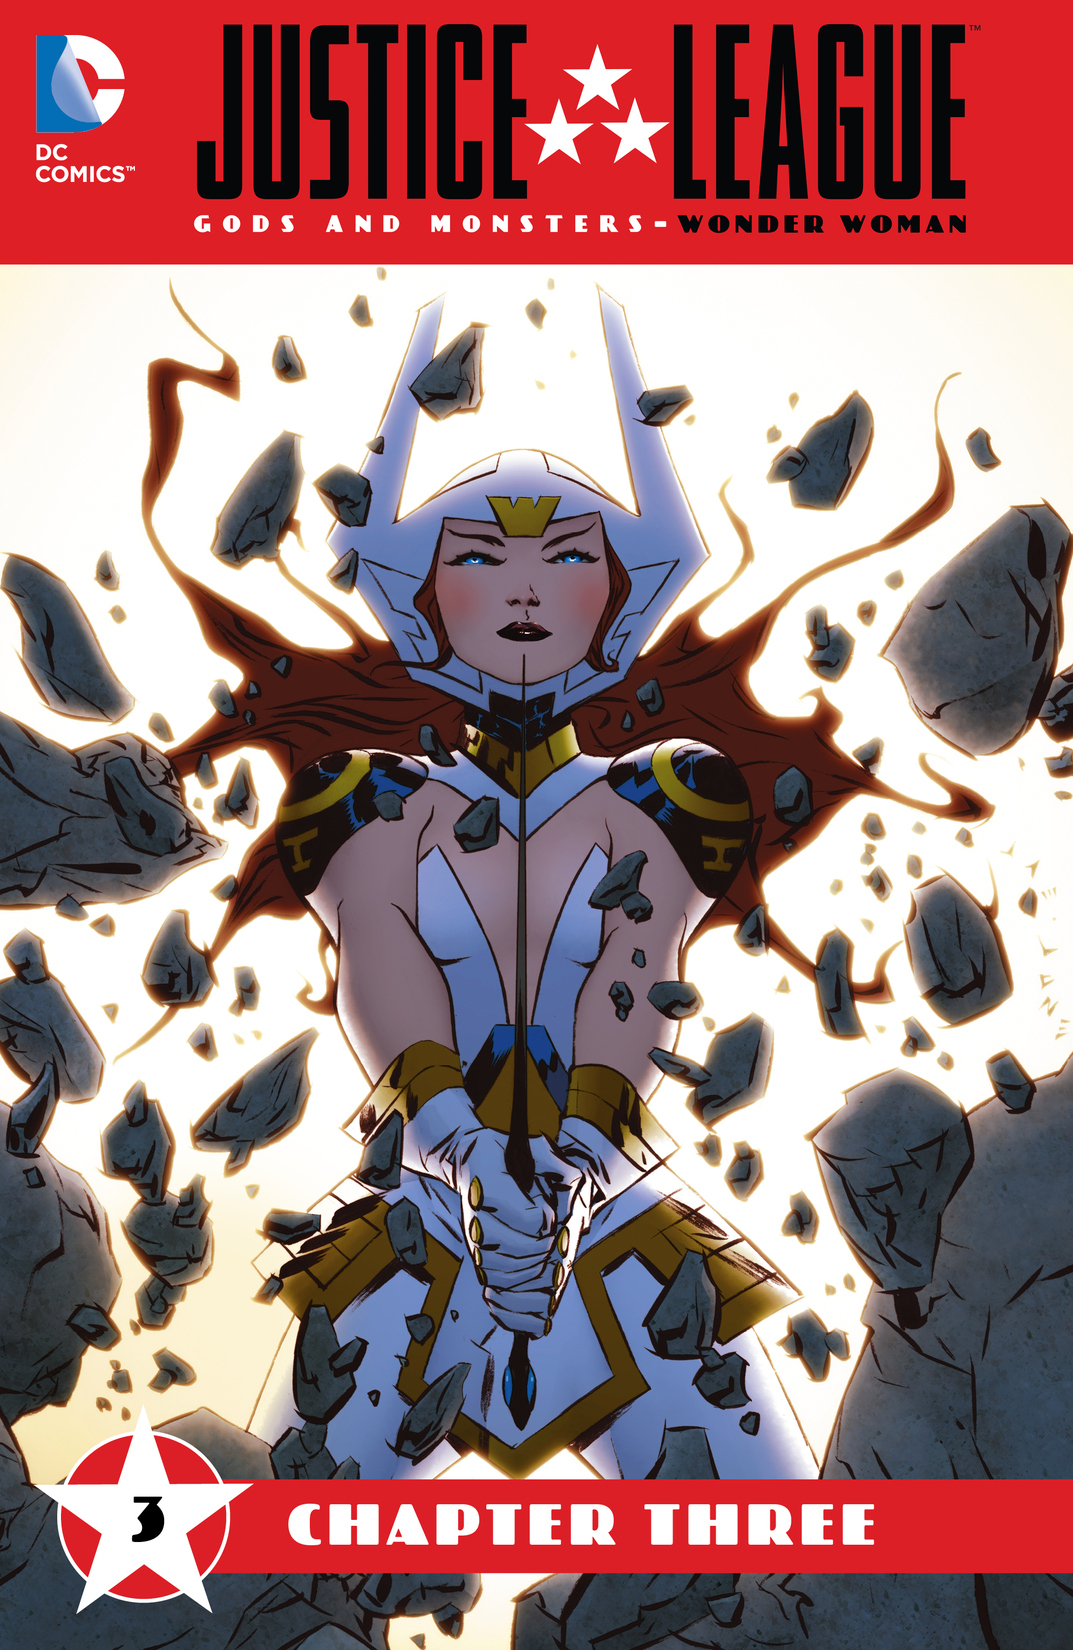 Justice League: Gods & Monsters WONDER WOMAN #3 preview images